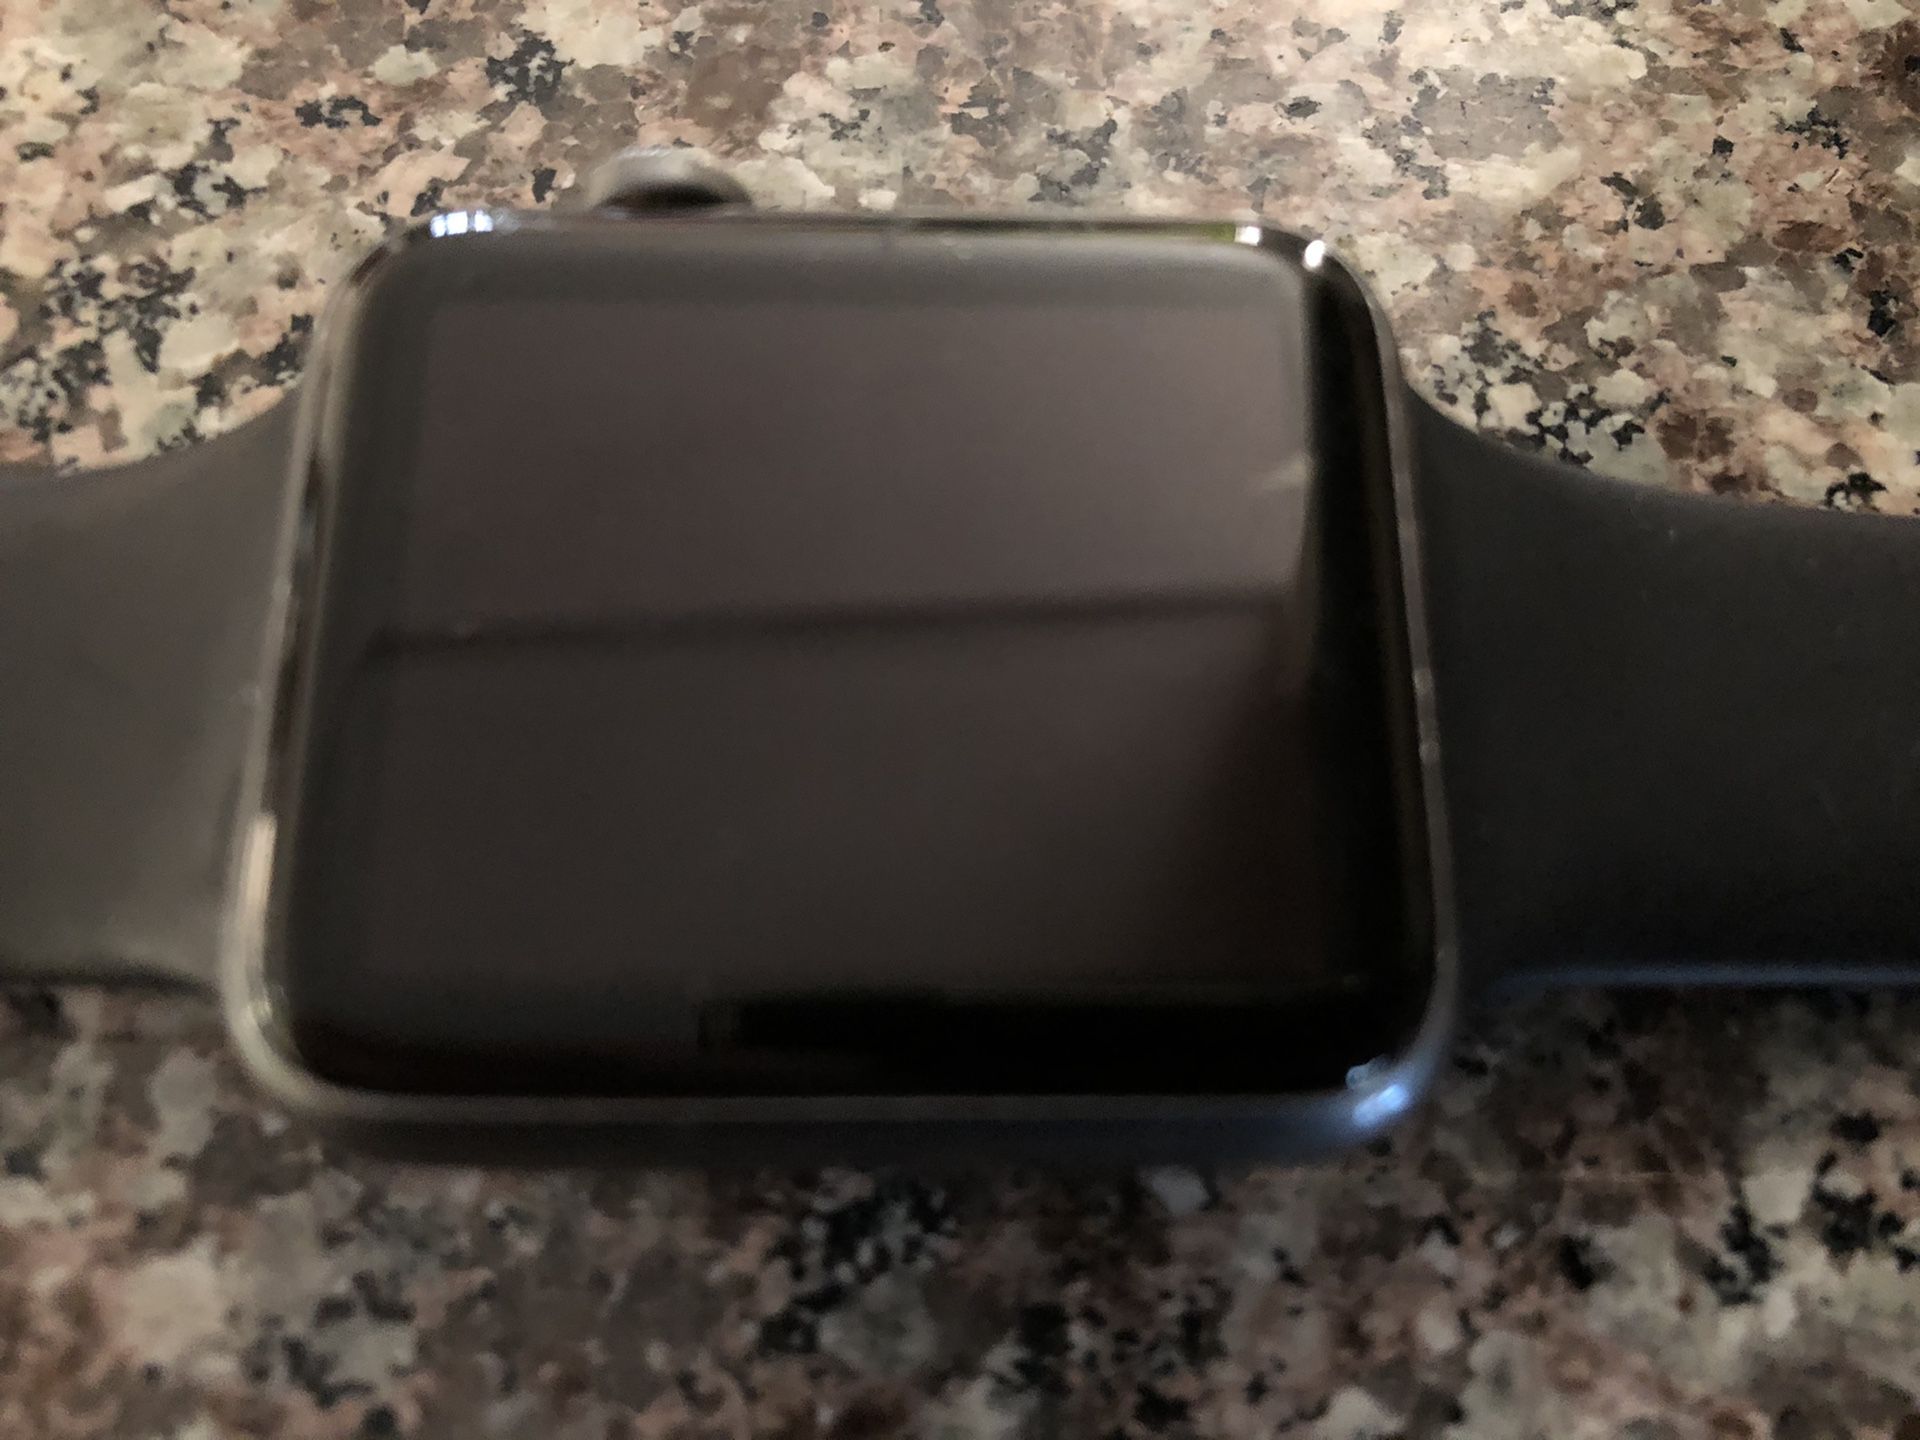 42mm series 3 Apple Watch size M/L